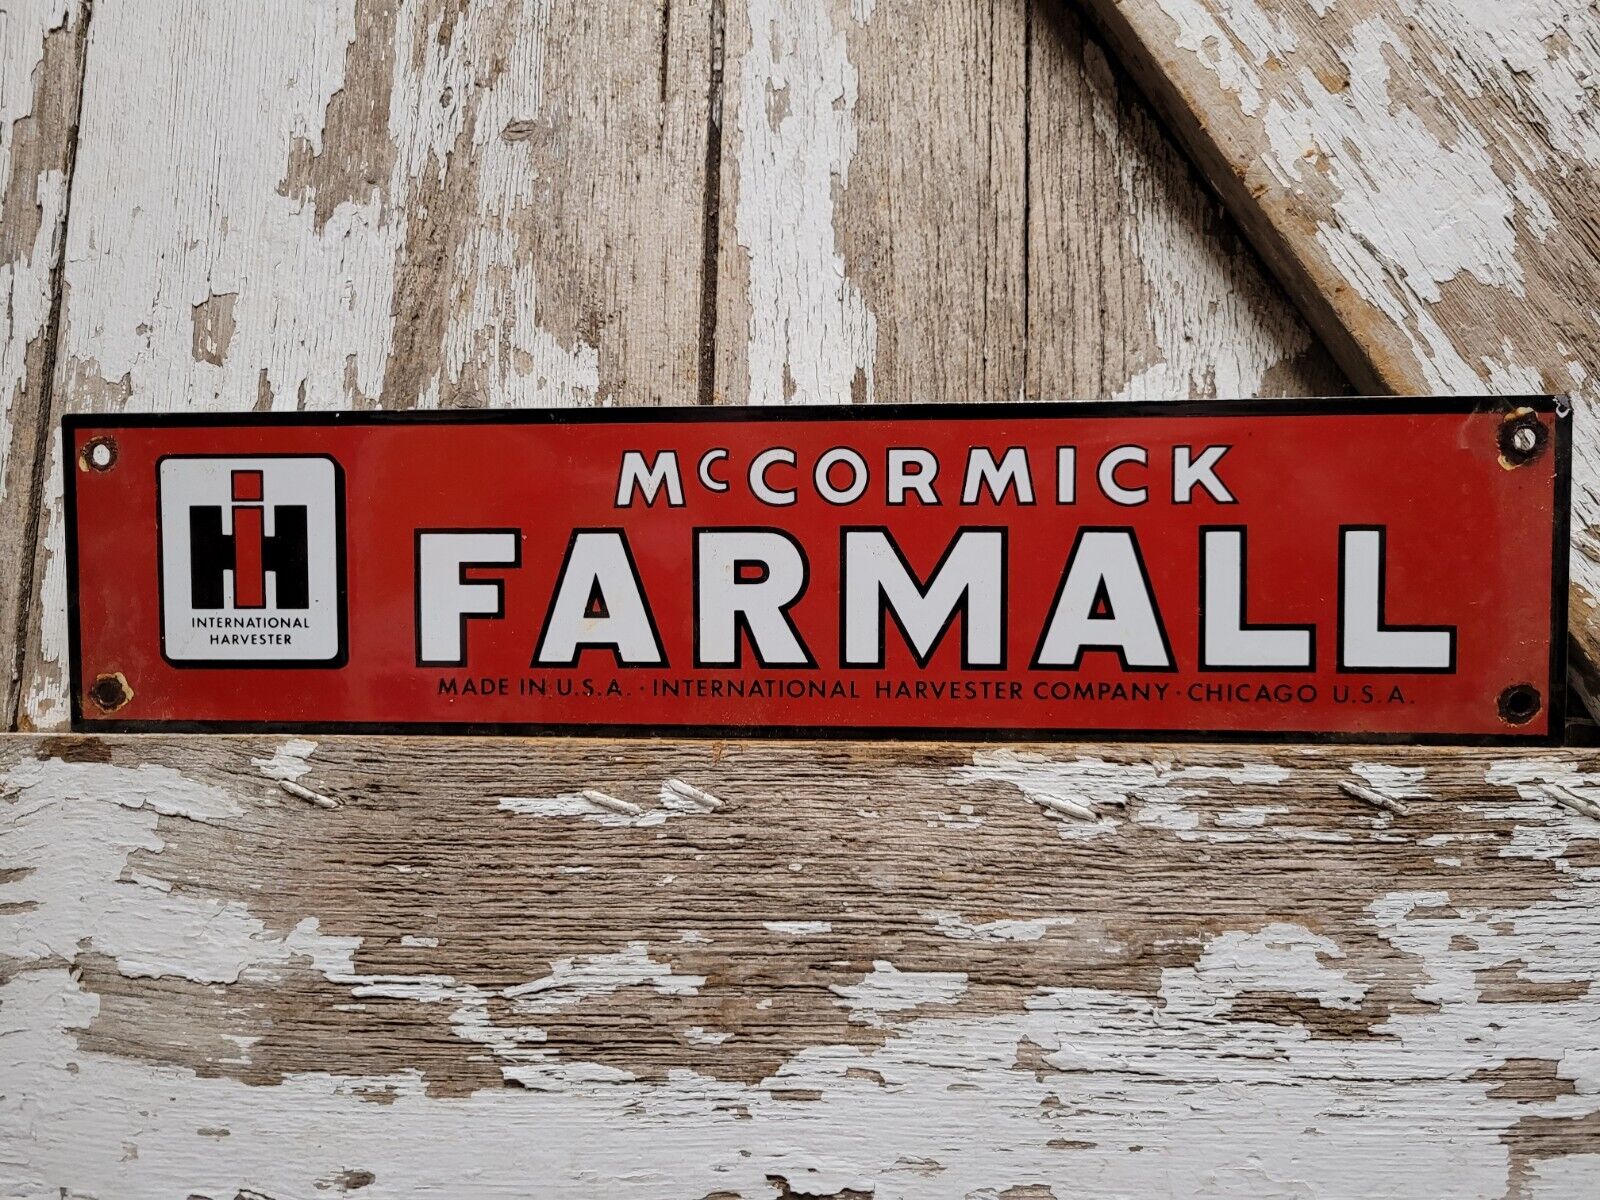 VINTAGE INTERNATIONAL HARVESTER PORCELAIN SIGN MCCORMICK FARMALL TRACTOR FARM